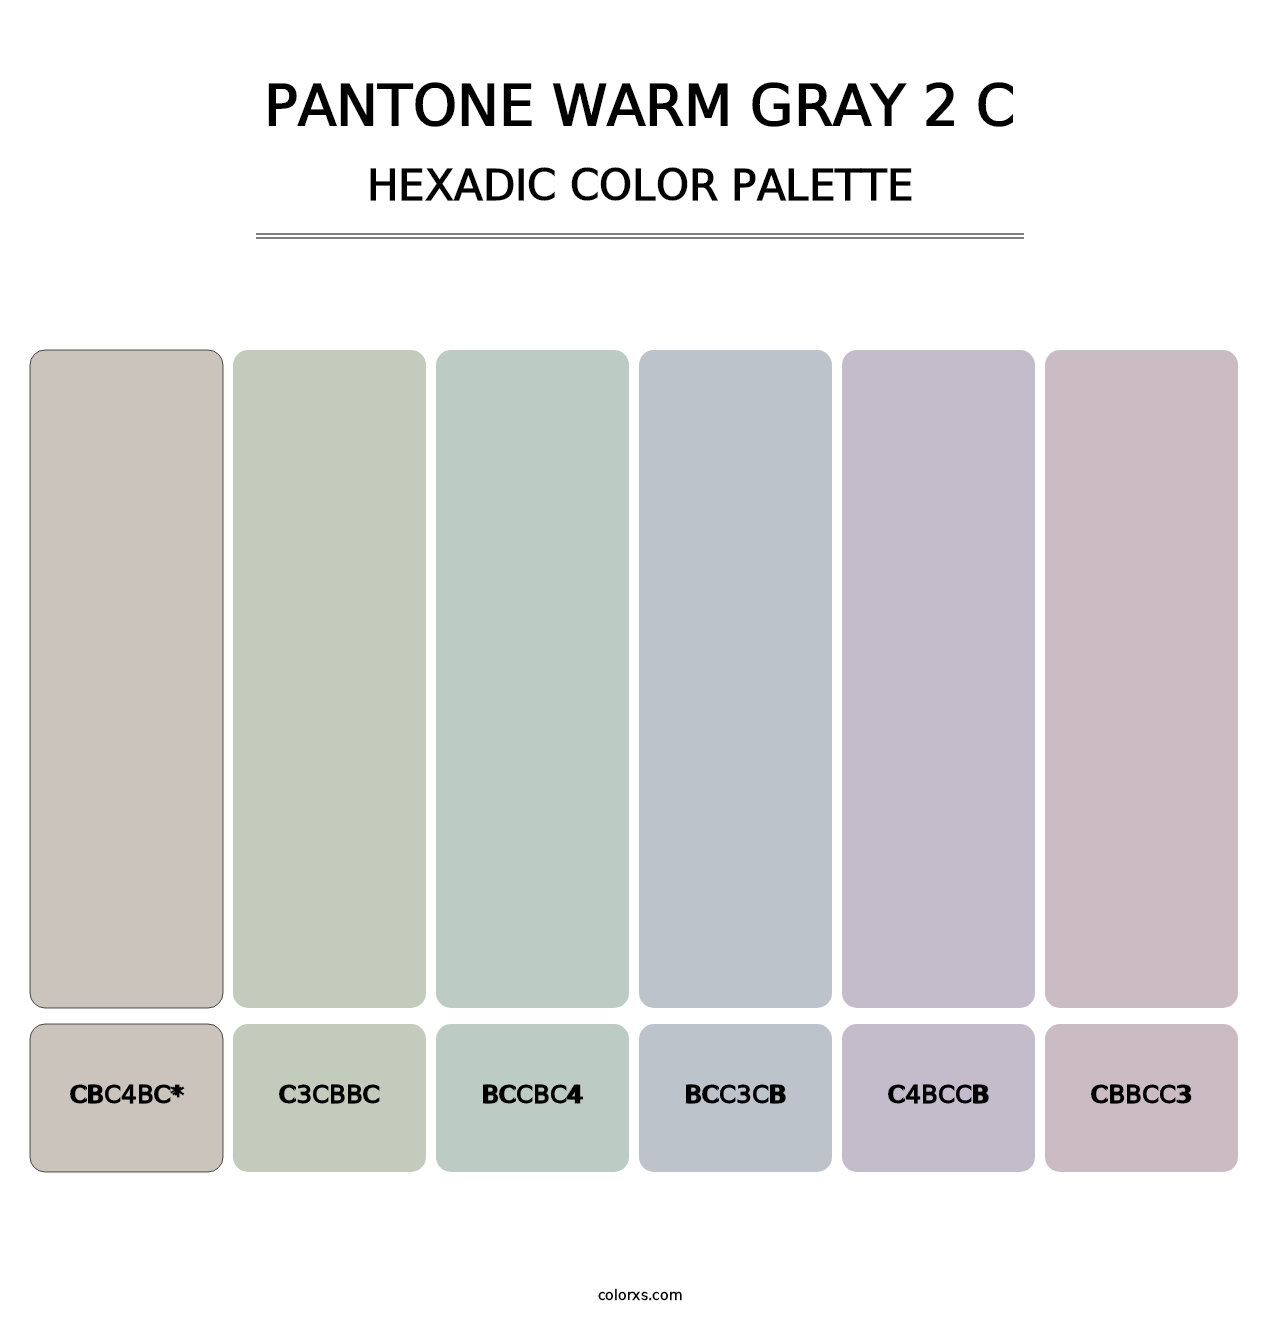 PANTONE Warm Gray 2 C - Hexadic Color Palette